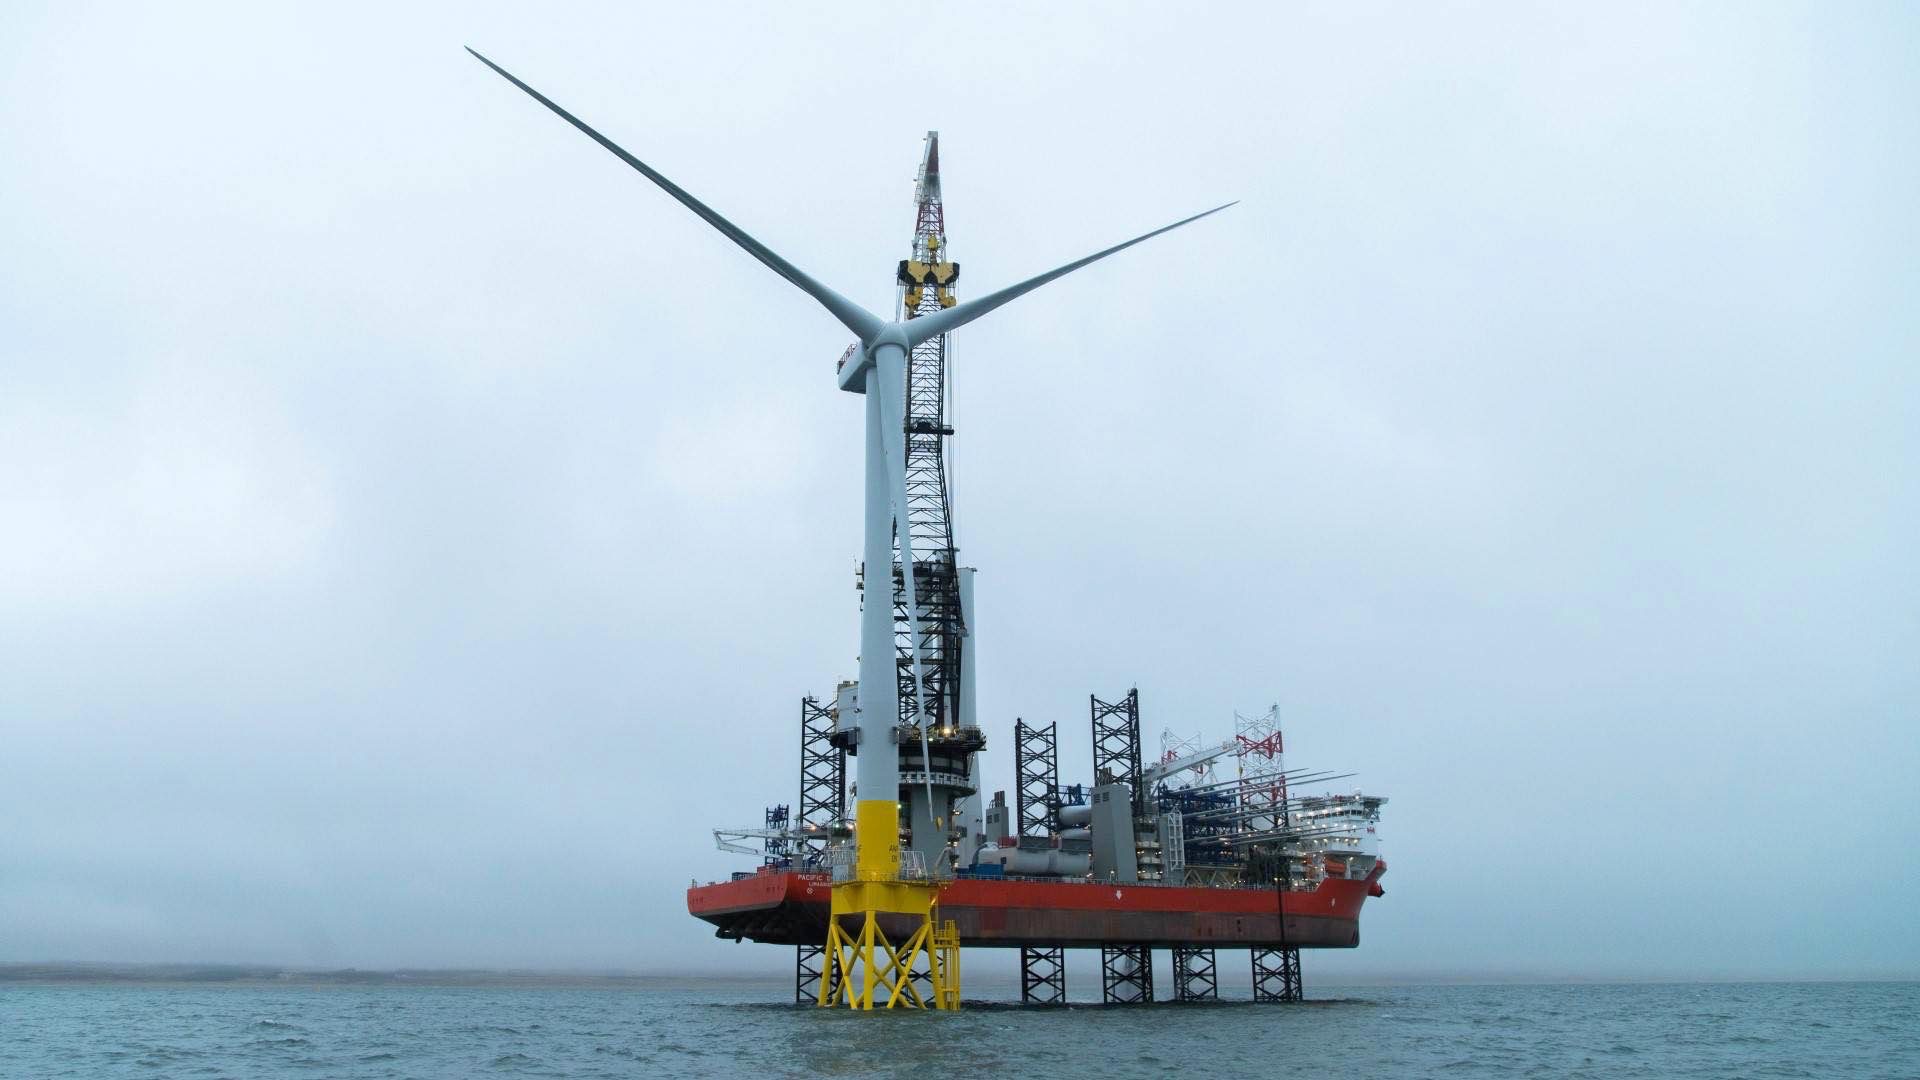 world's most powerful offshore wind turbine installation